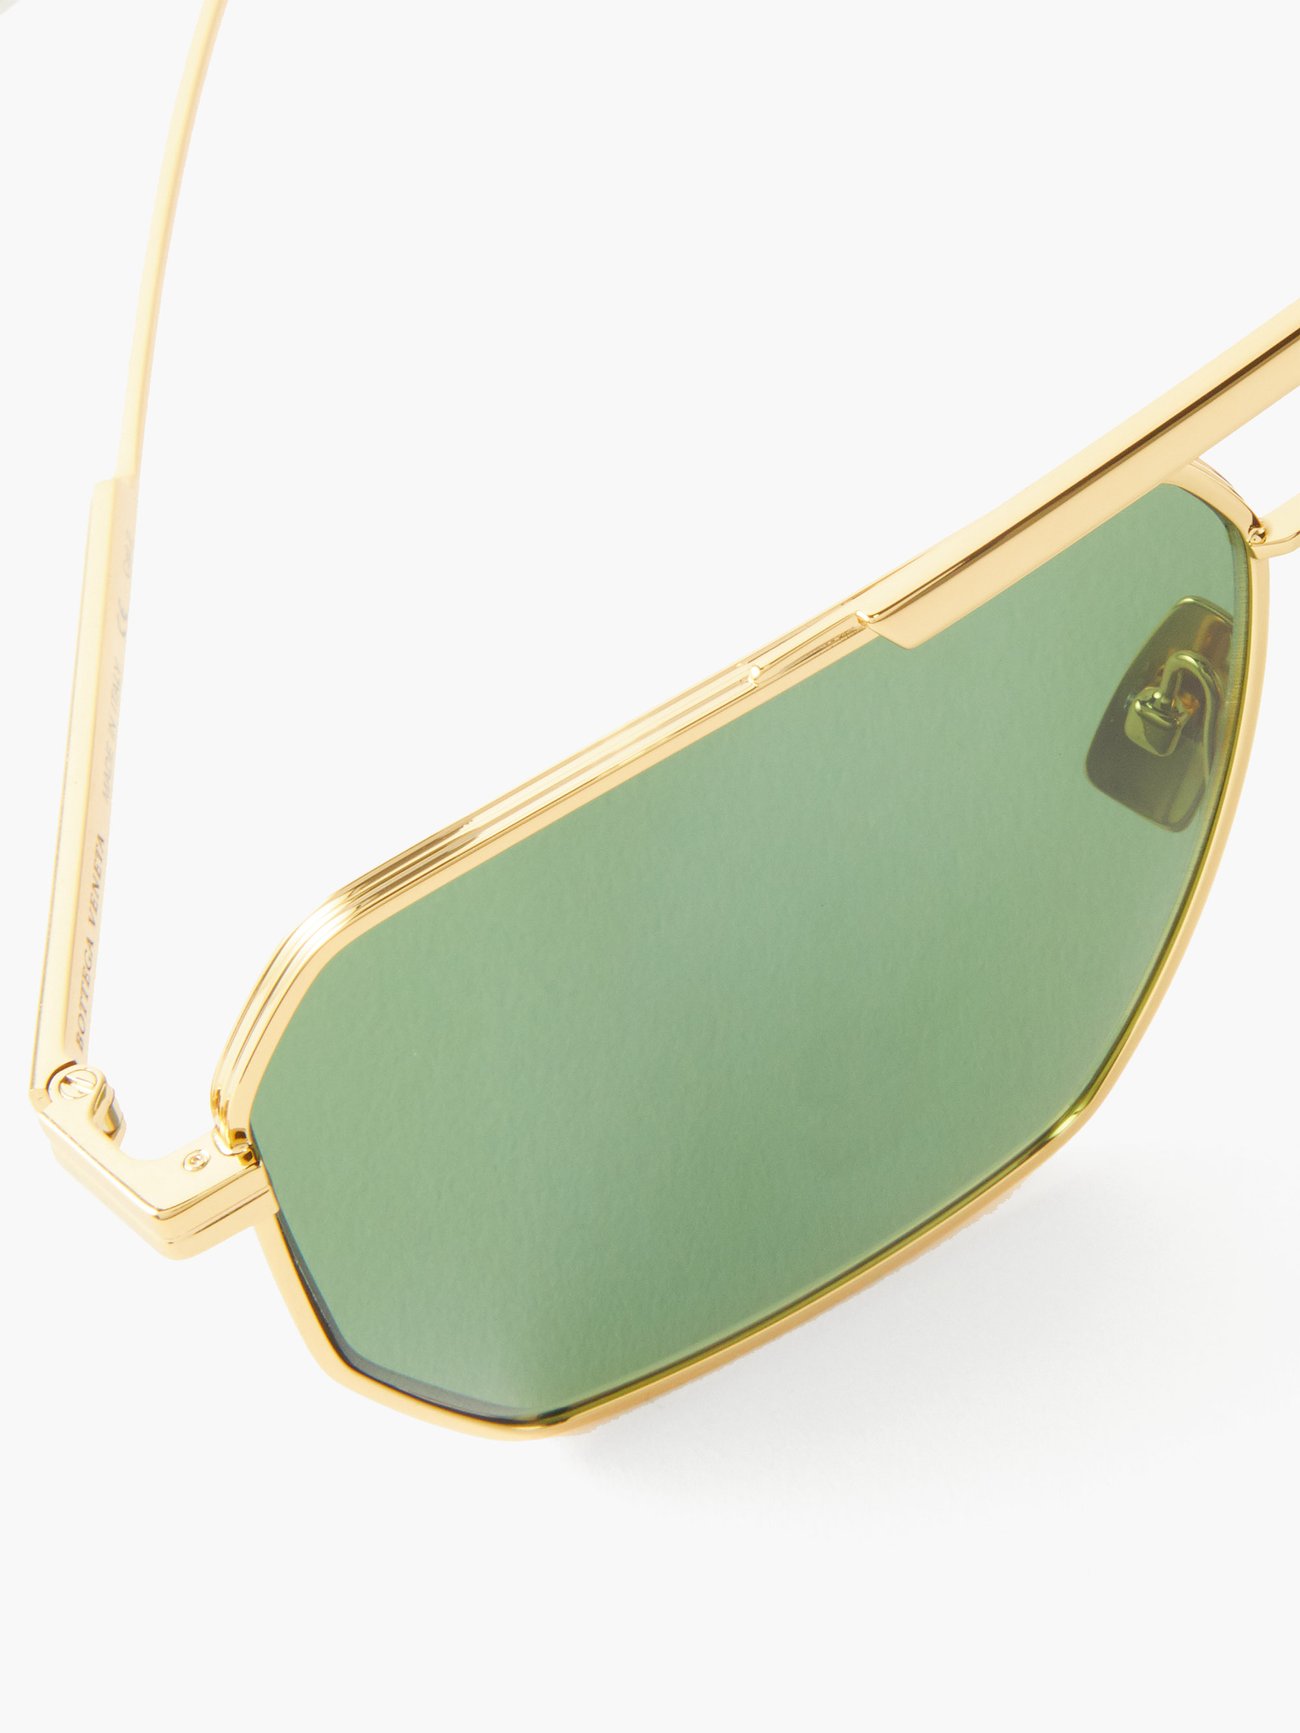 Bottega Veneta Men's & Women's Designer Sunglasses